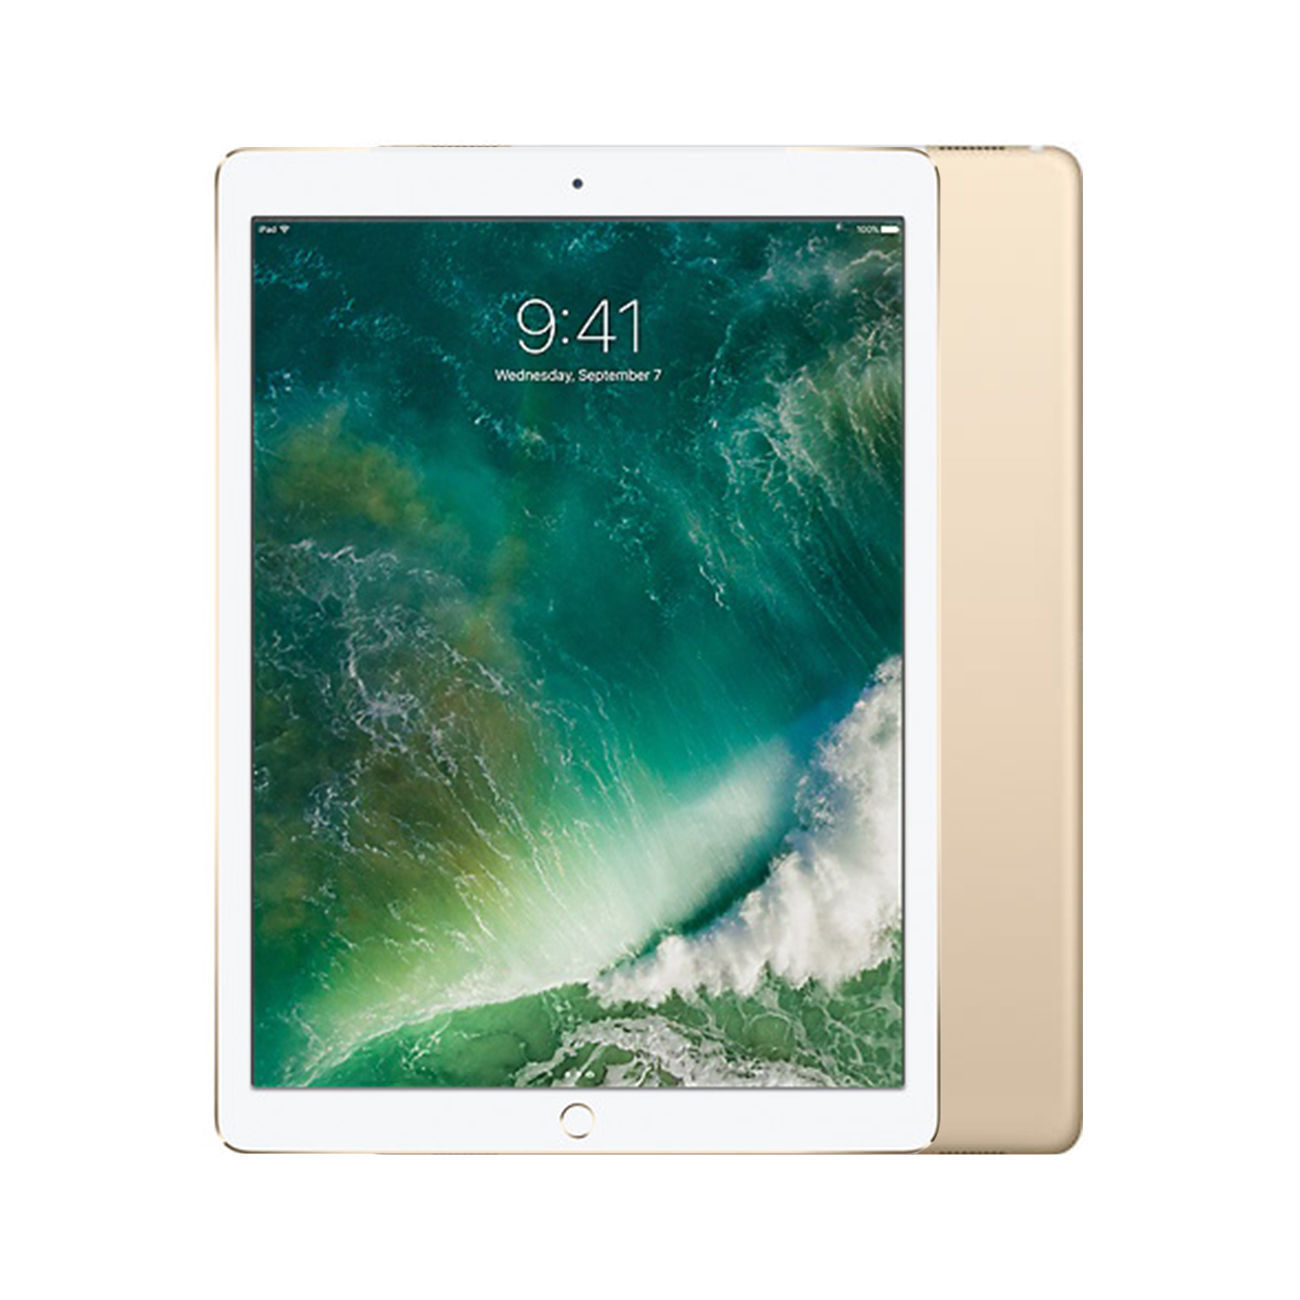 Apple iPad Pro 12.9 Wi-Fi + Cellular [32GB] [Gold] [Very Good] [12M]